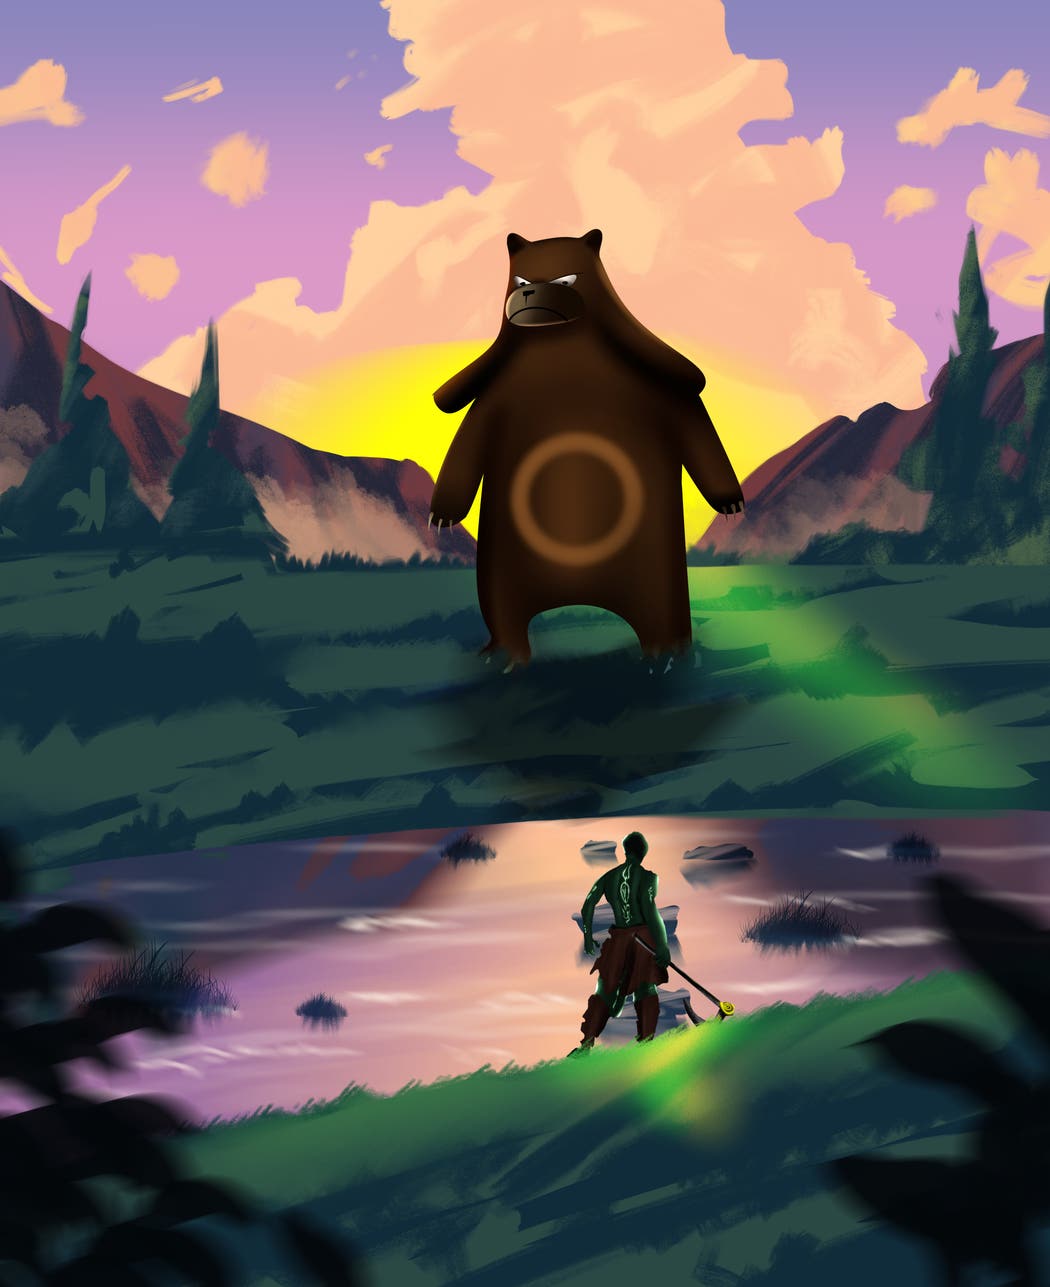 Artist vs Bear #2